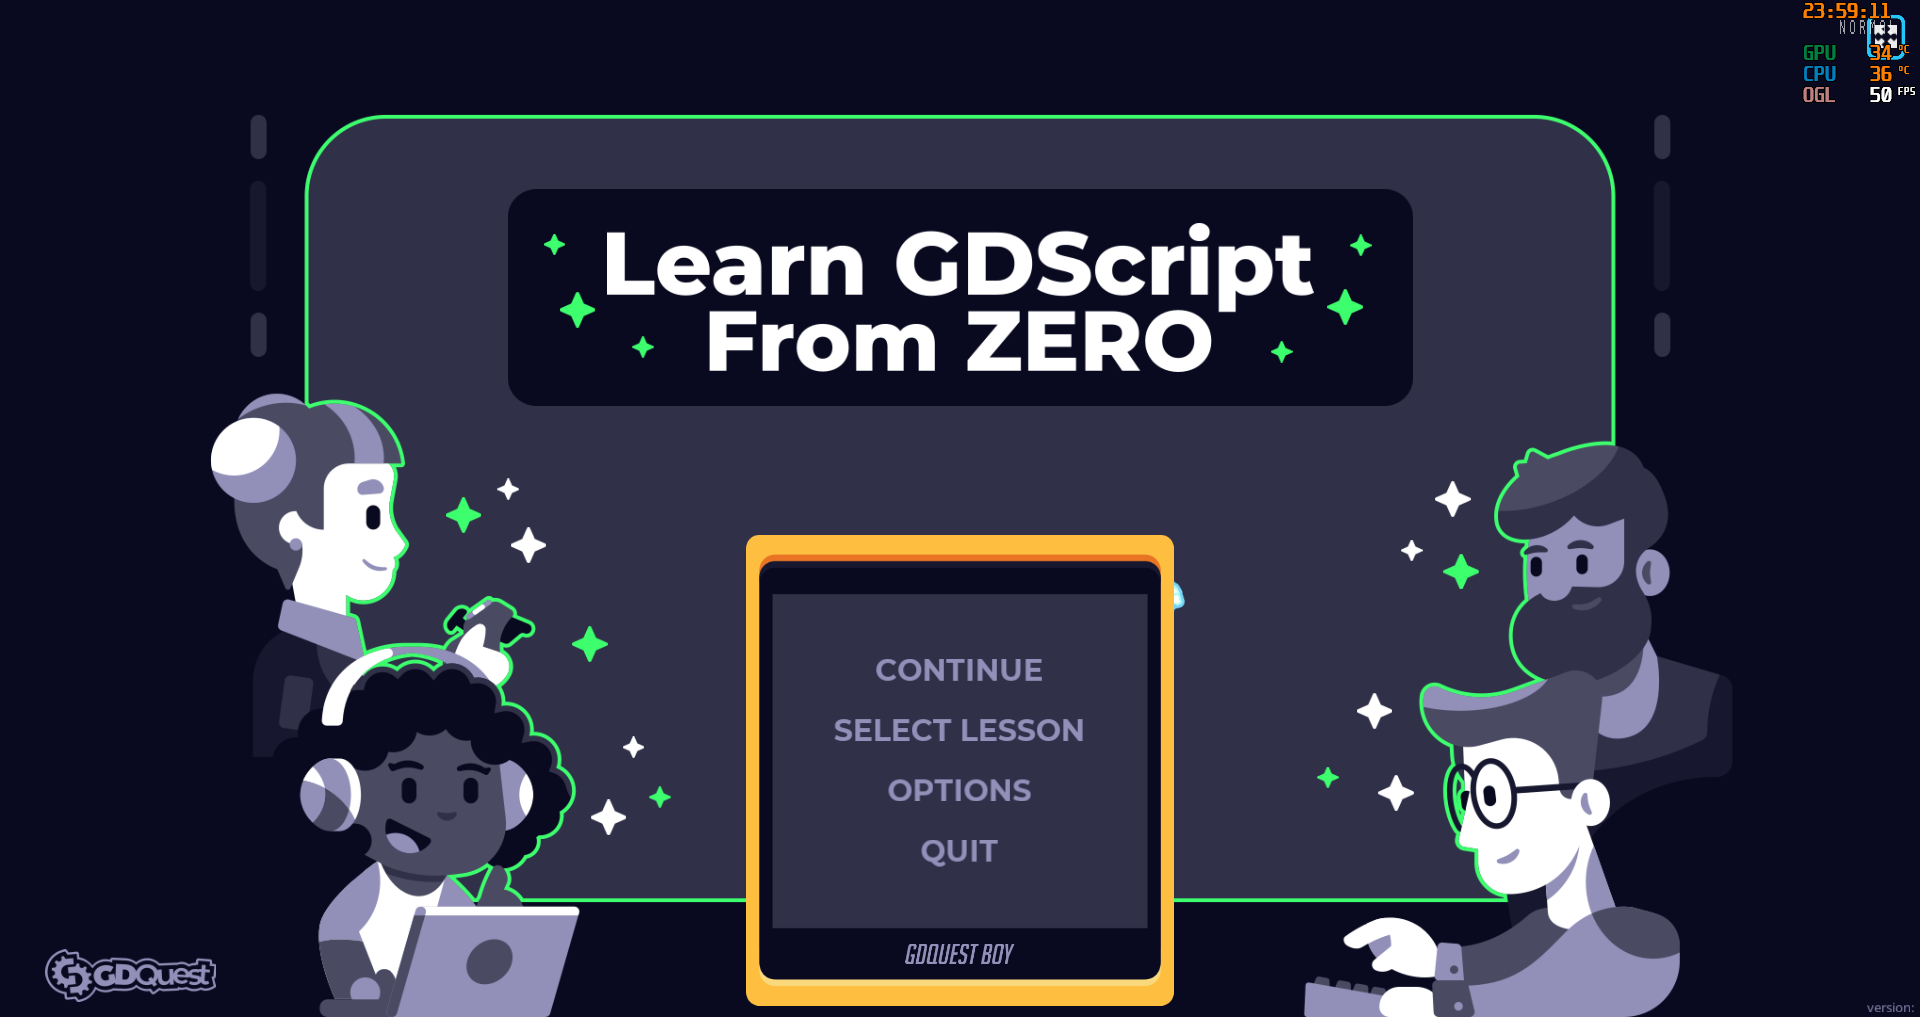 Game Development Mini-Degree - Learn to Code and Make Games by Zenva —  Kickstarter